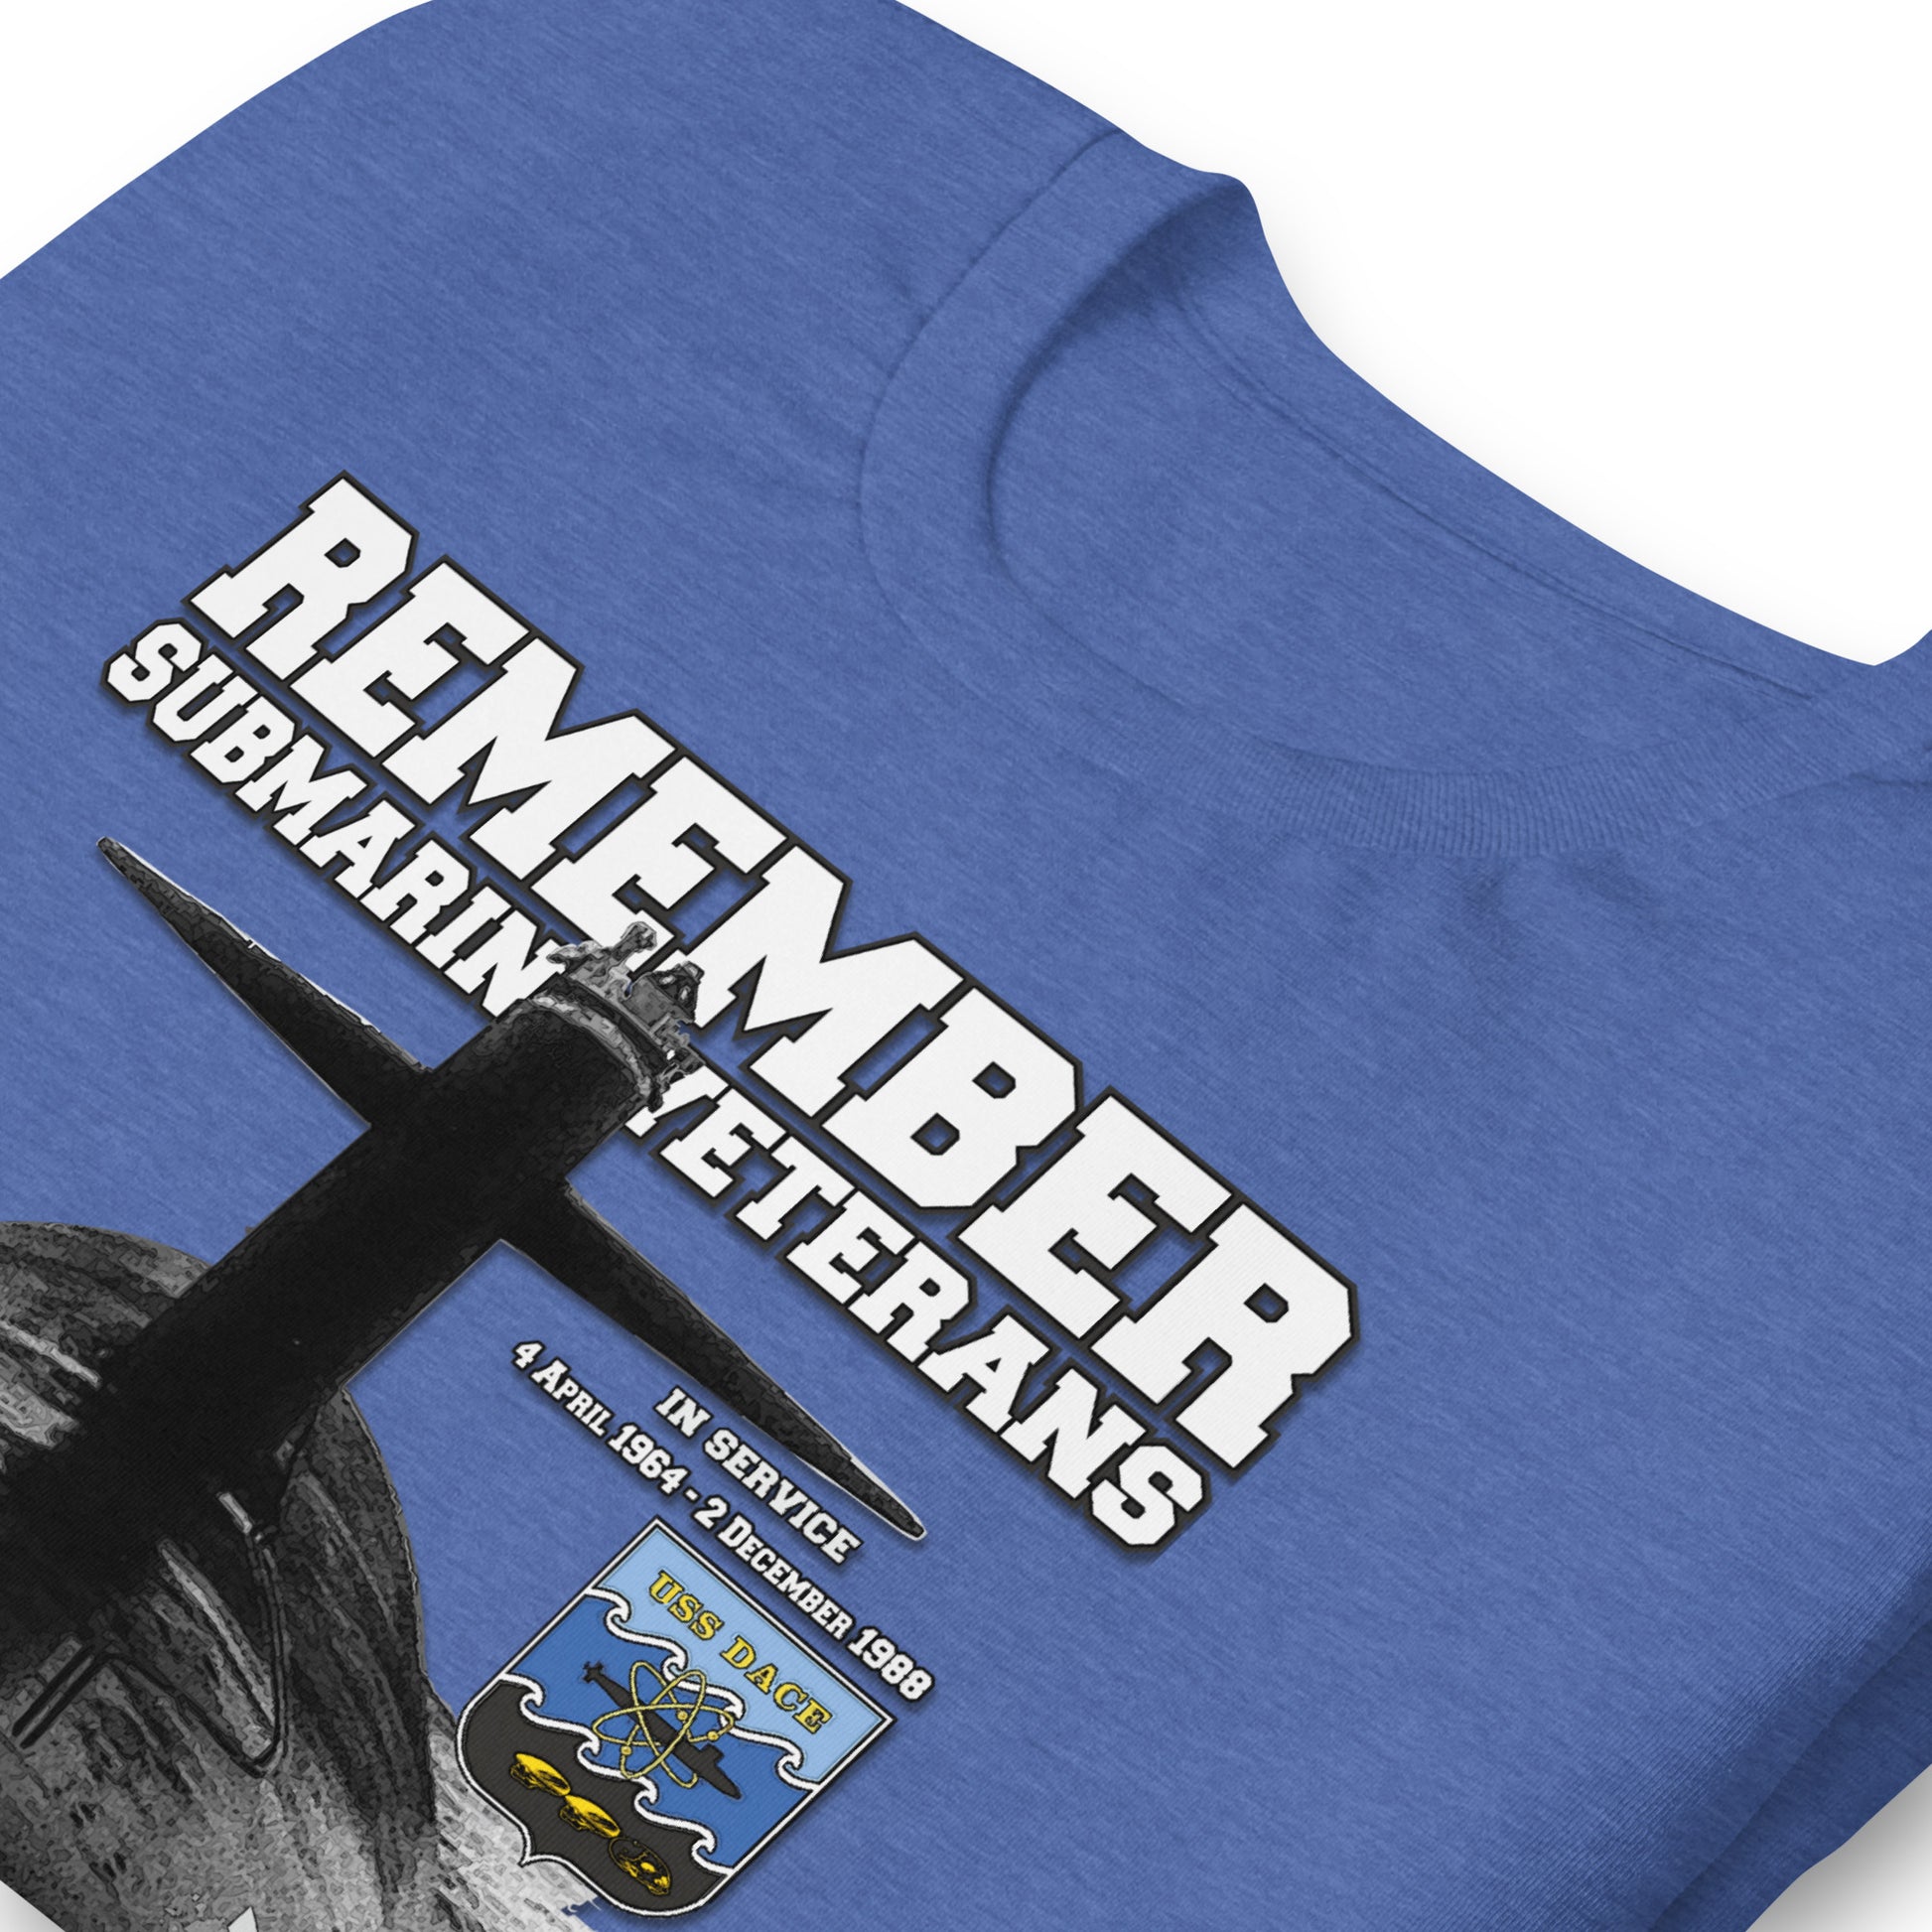 USS DACE SSN-607 t-shirt,Submarine Veterans Unisex t-shirt, Comancha Store,